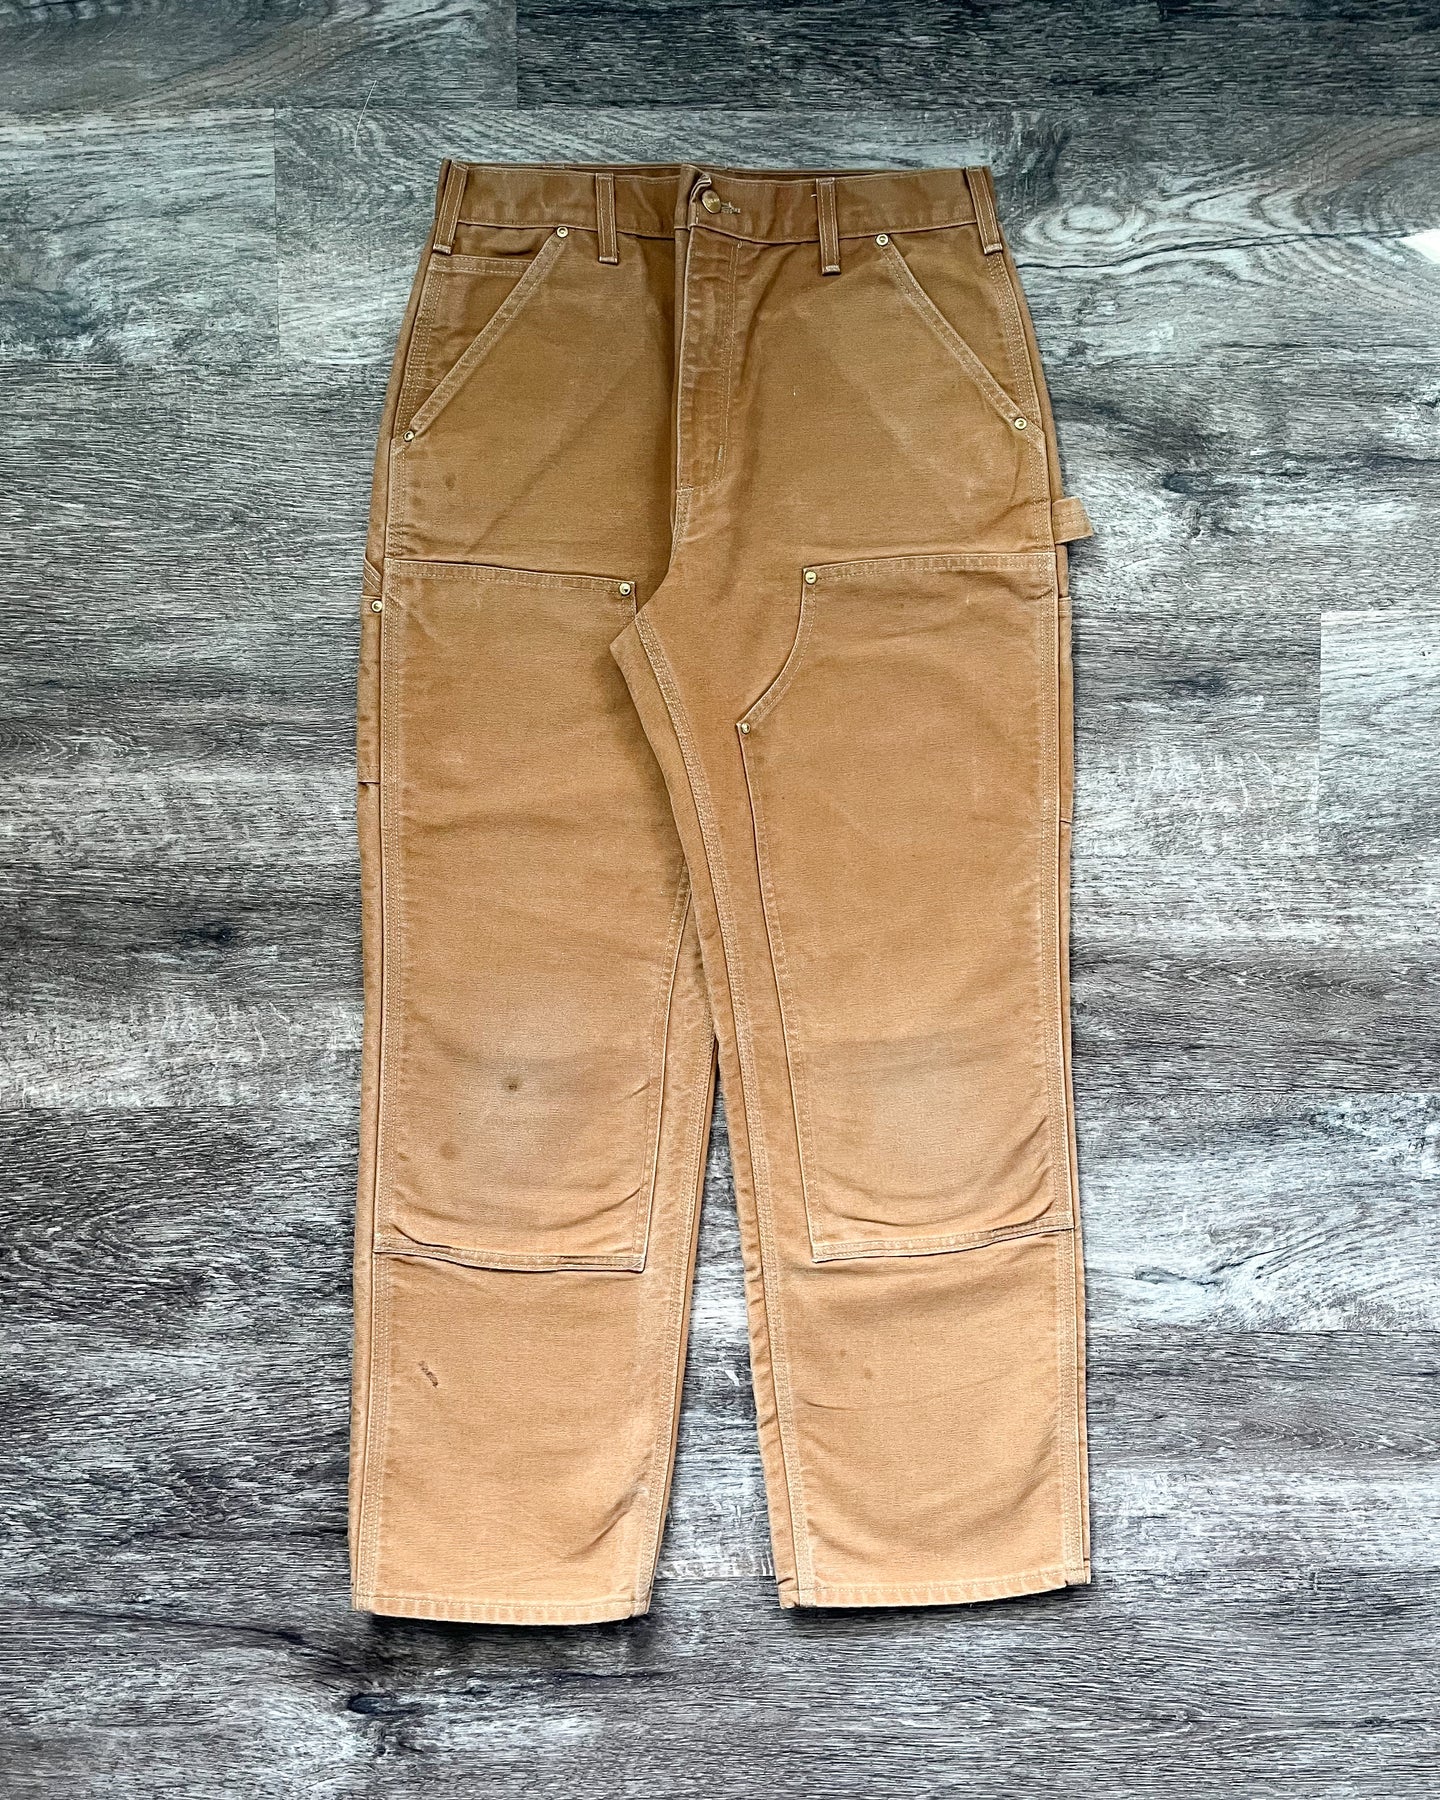 1990s Carhartt Tan Double Knee Work Pants - Size 32 x 30